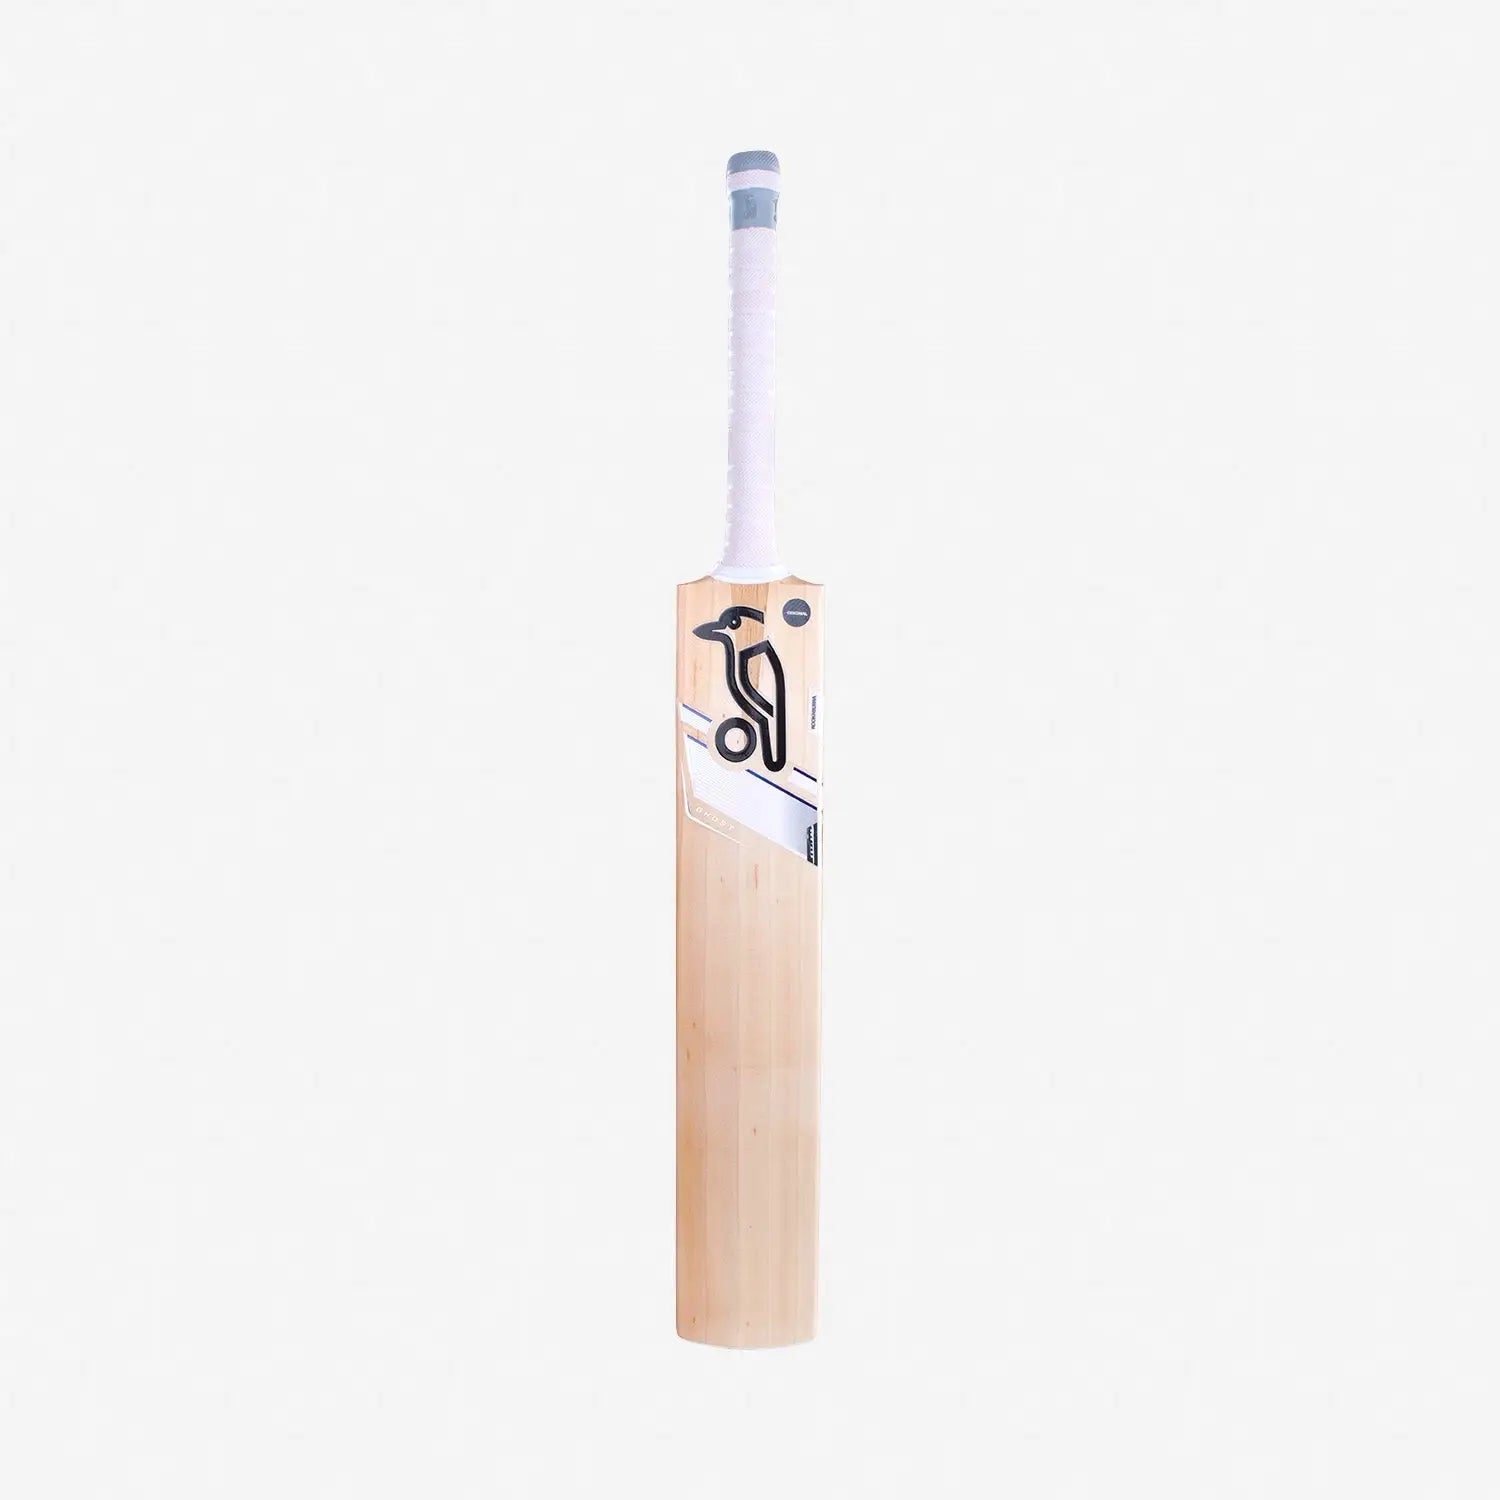 Kookaburra GHOST 4.1 Cricket Bat English Willow - Short Handle - BATS - MENS ENGLISH WILLOW